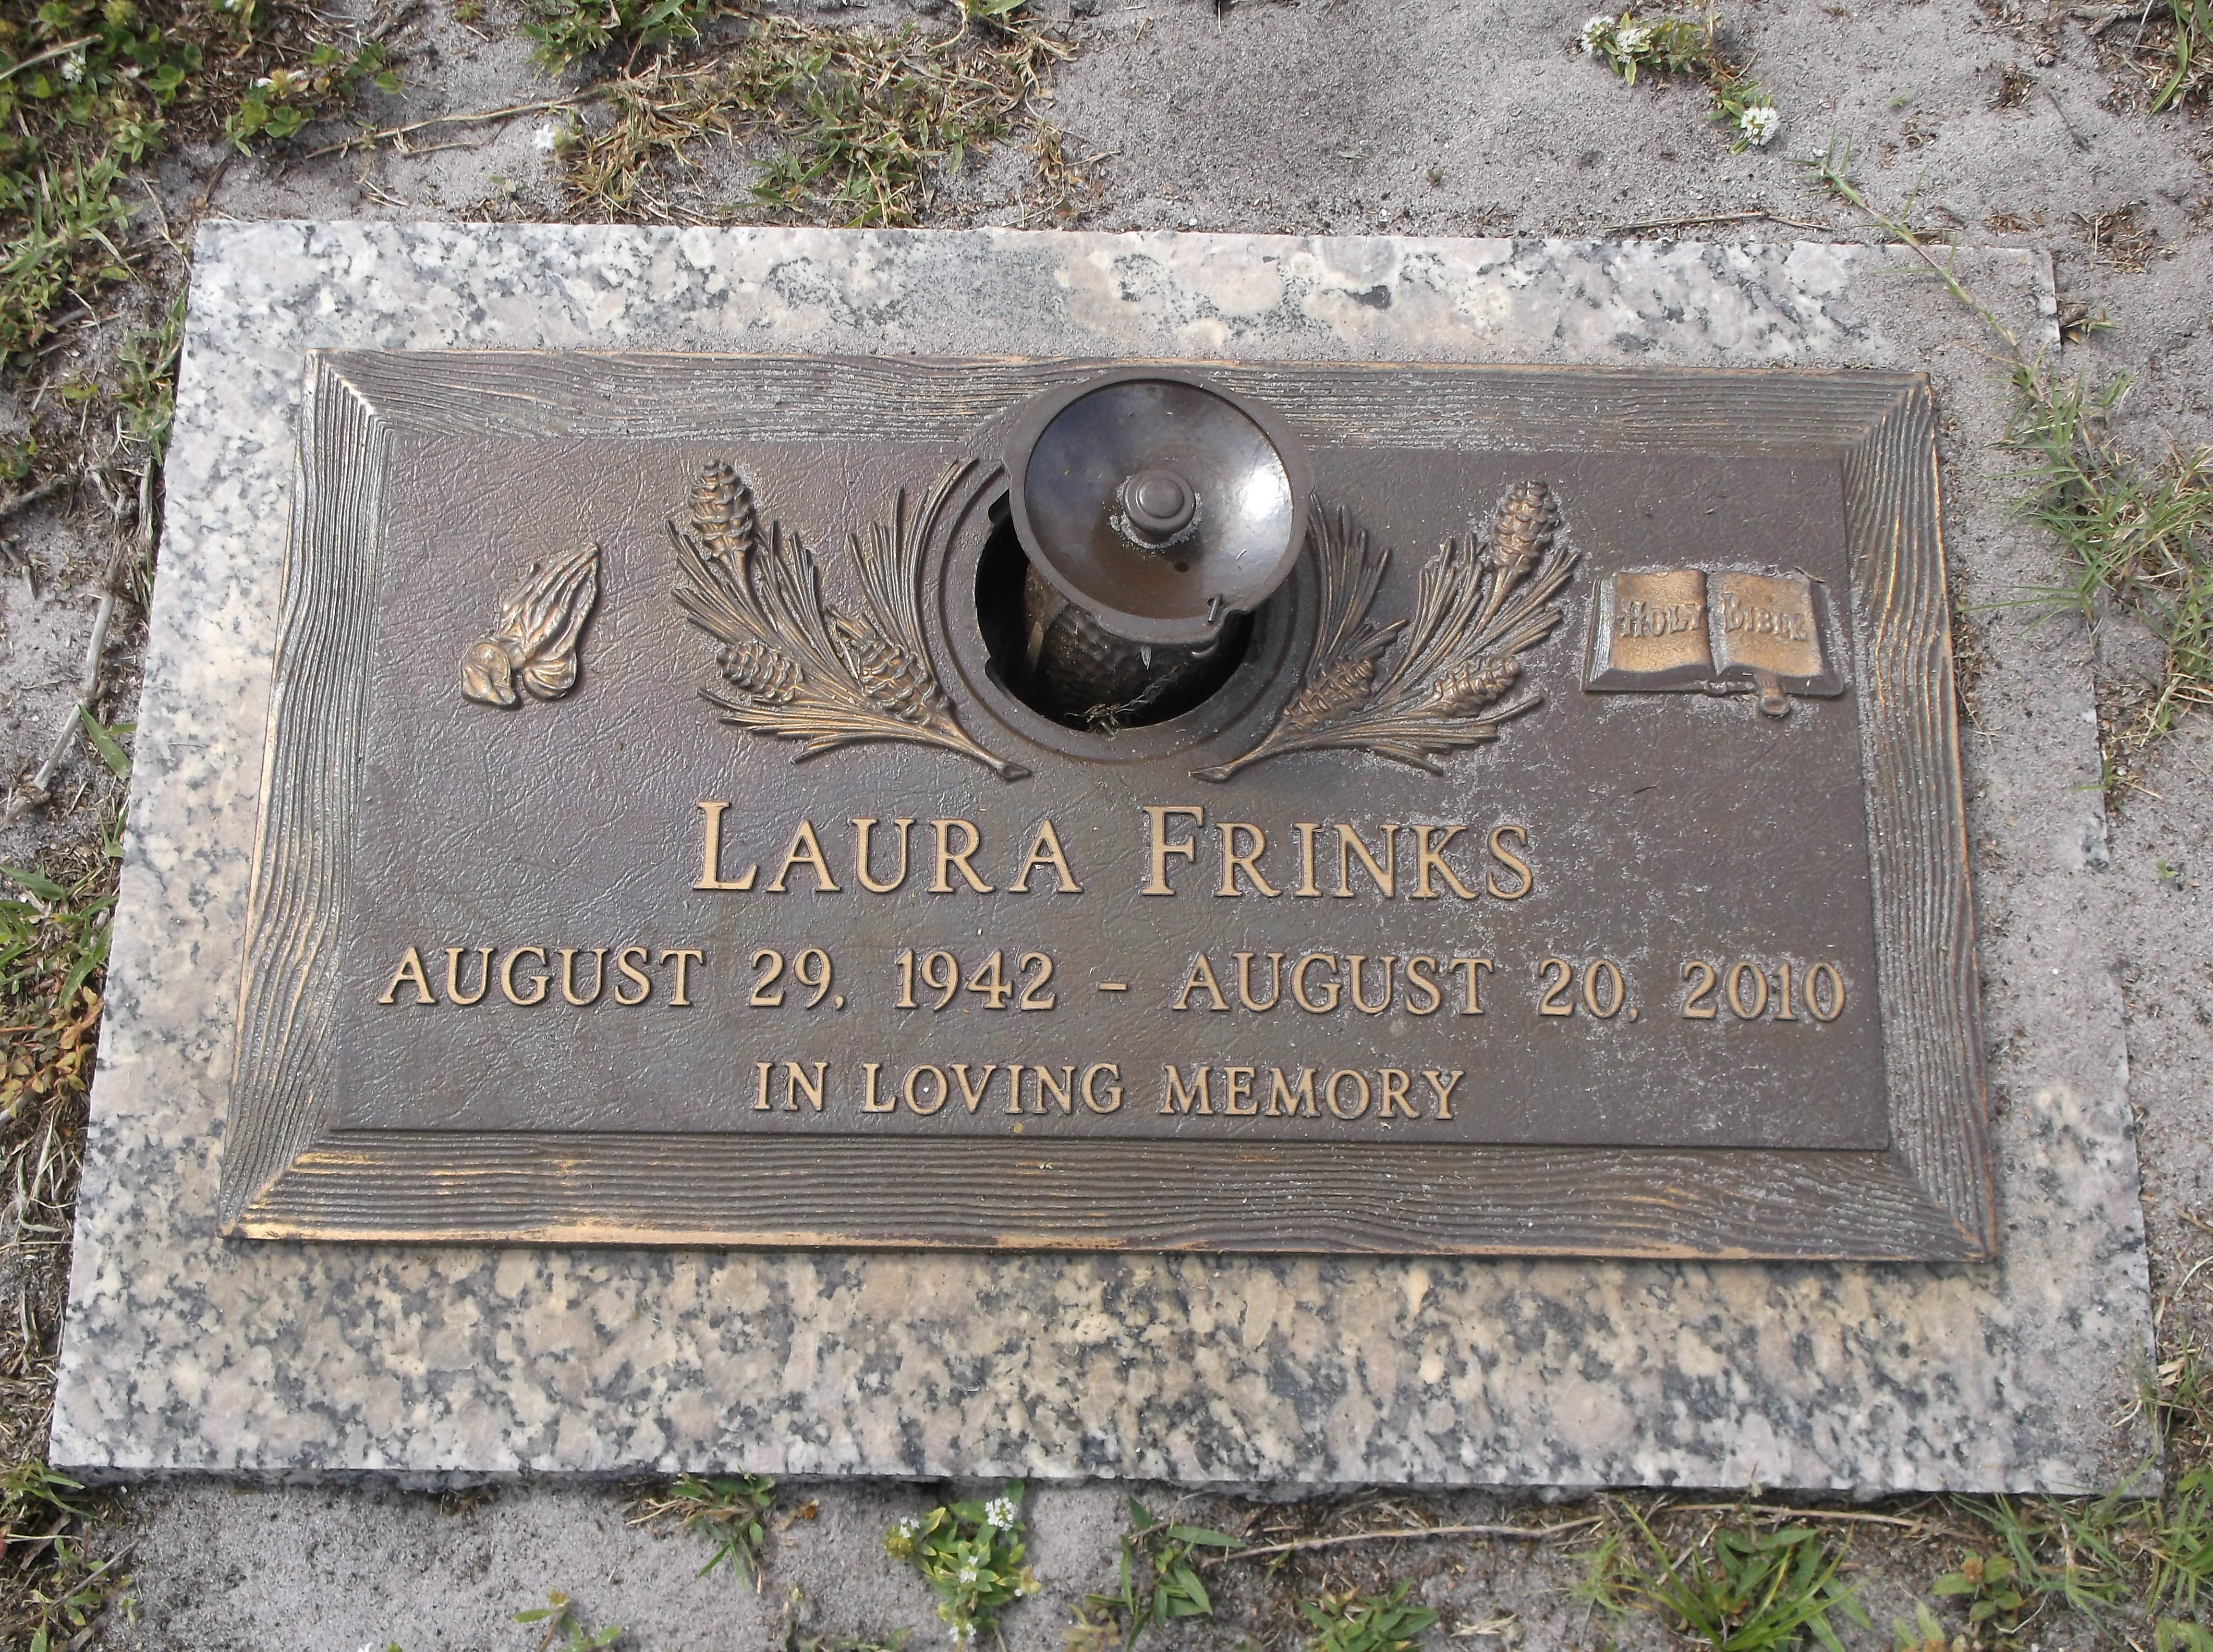 Laura Frinks